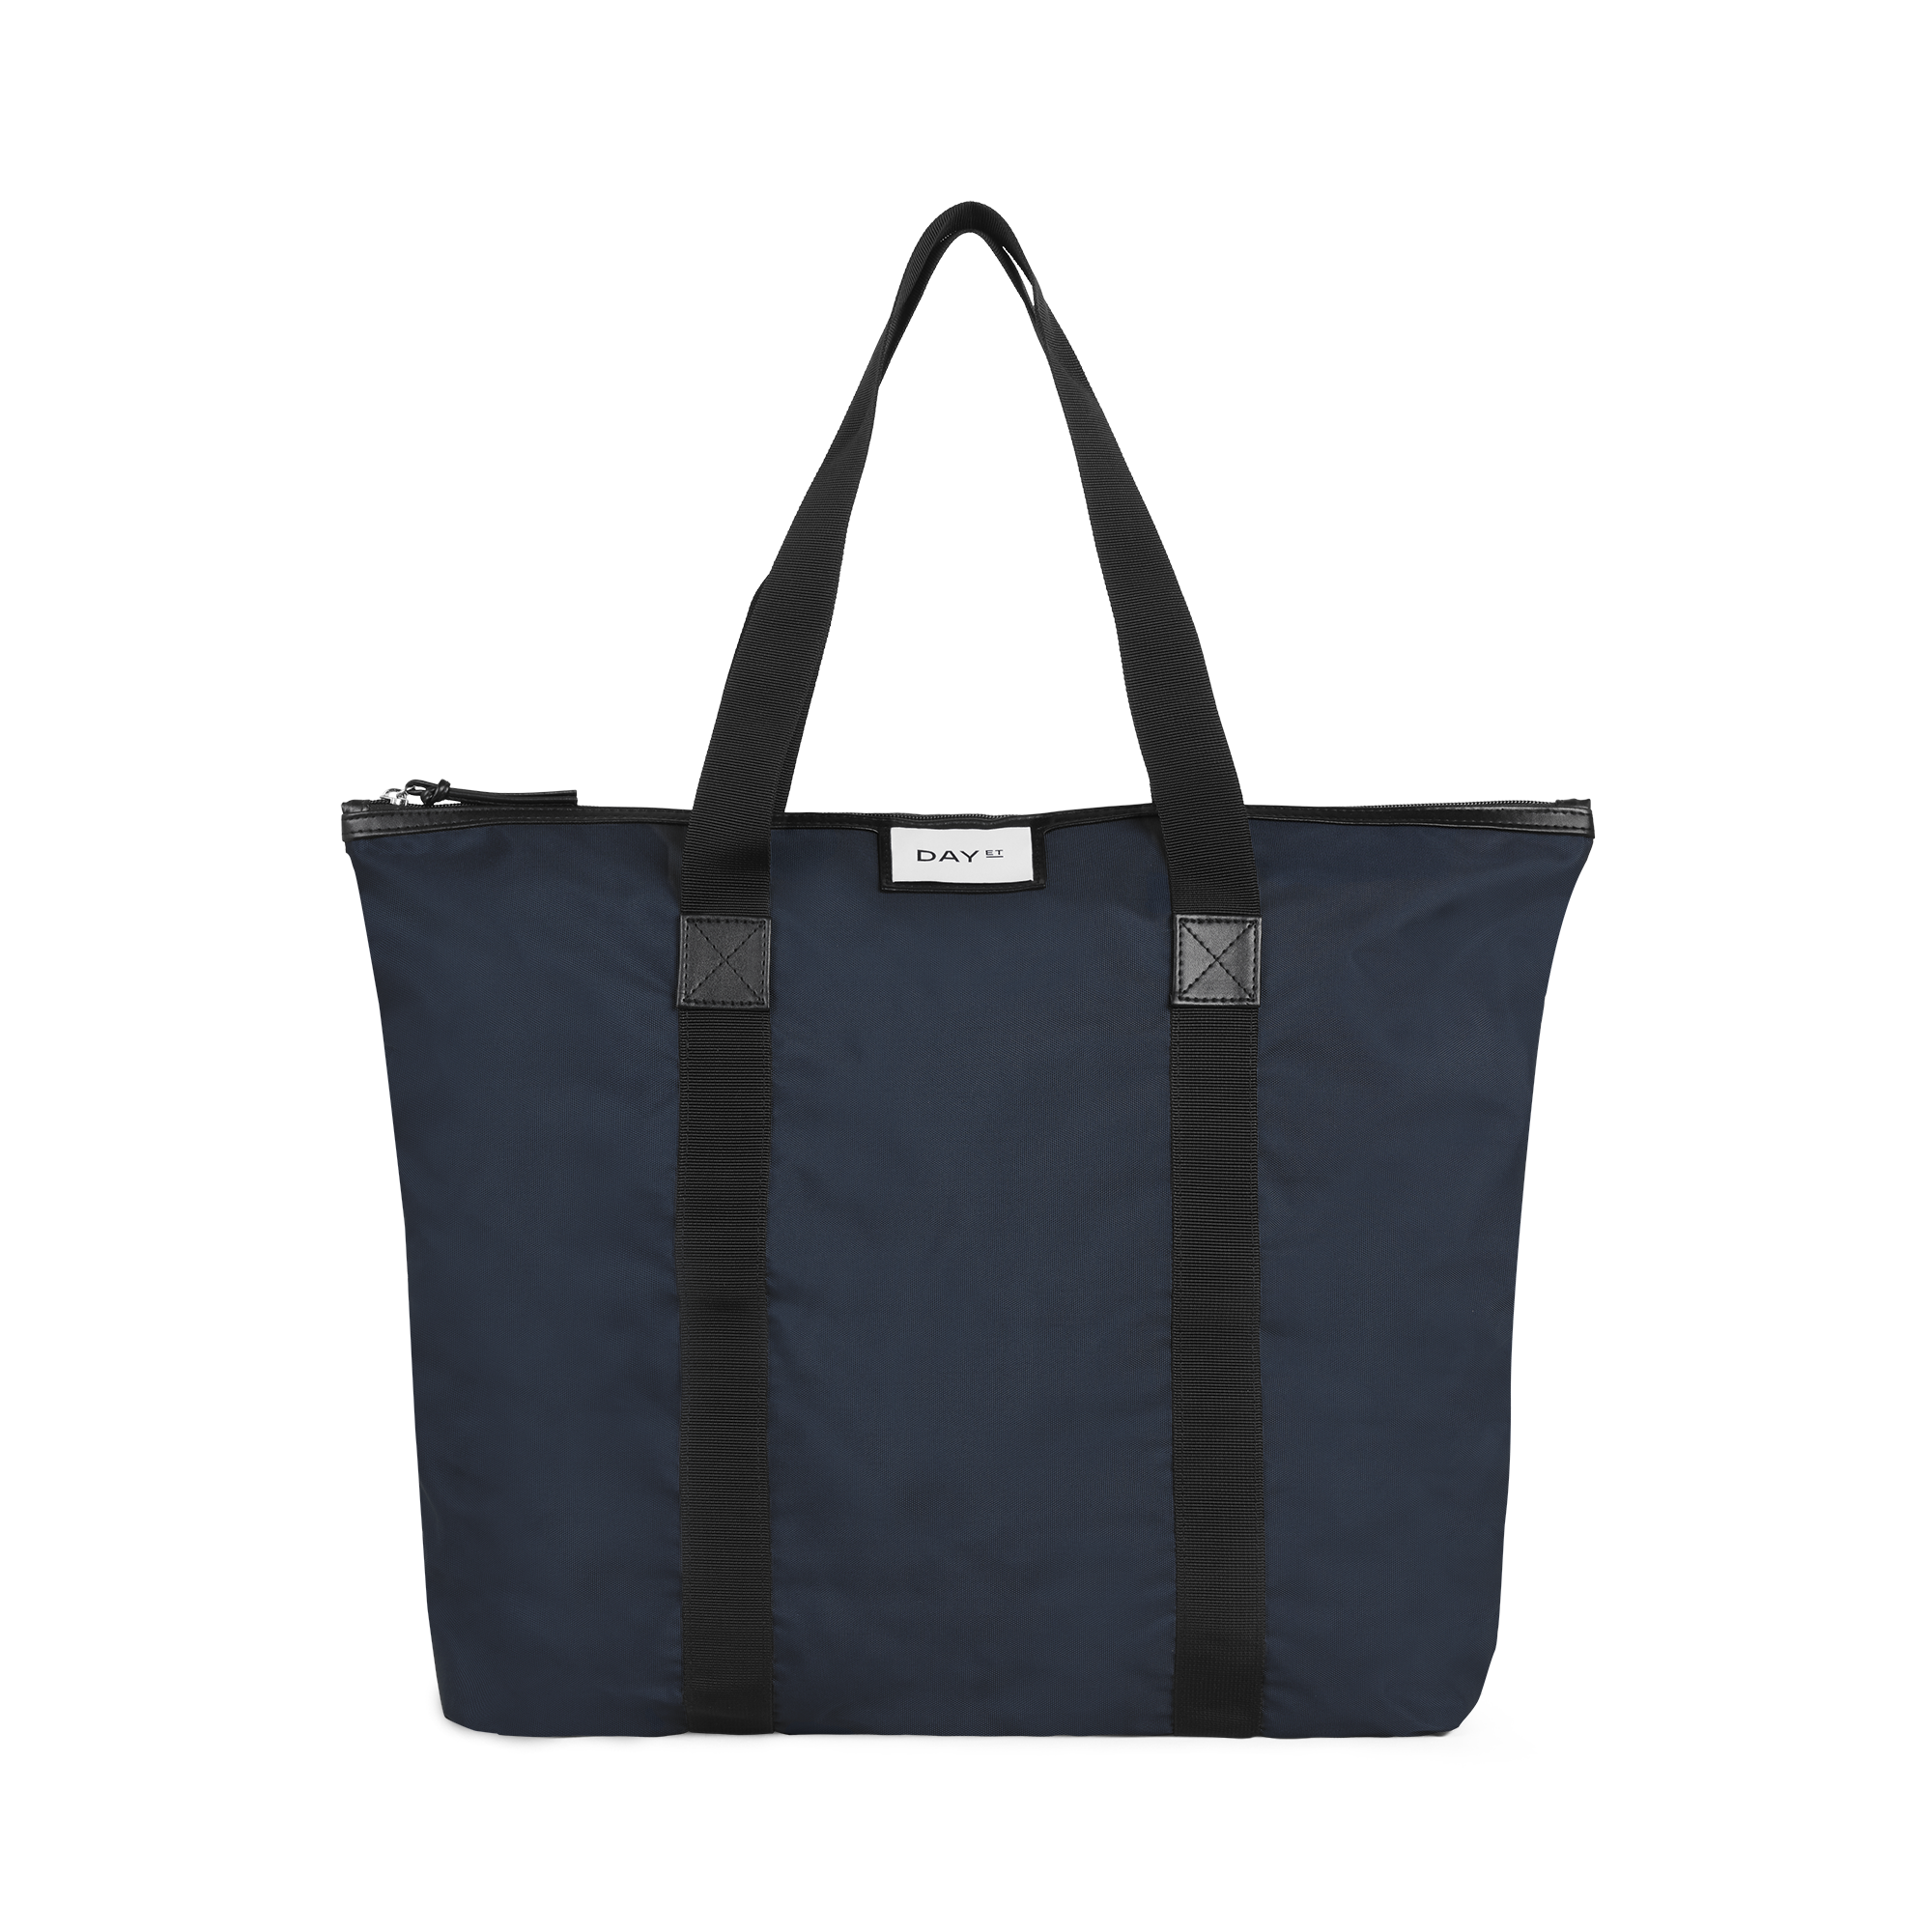 Bag / Veske | Stor | Mørkeblå | Bærekraftig | Romslig Hovedrom | Navy Blazer | Gwenneth Re-S